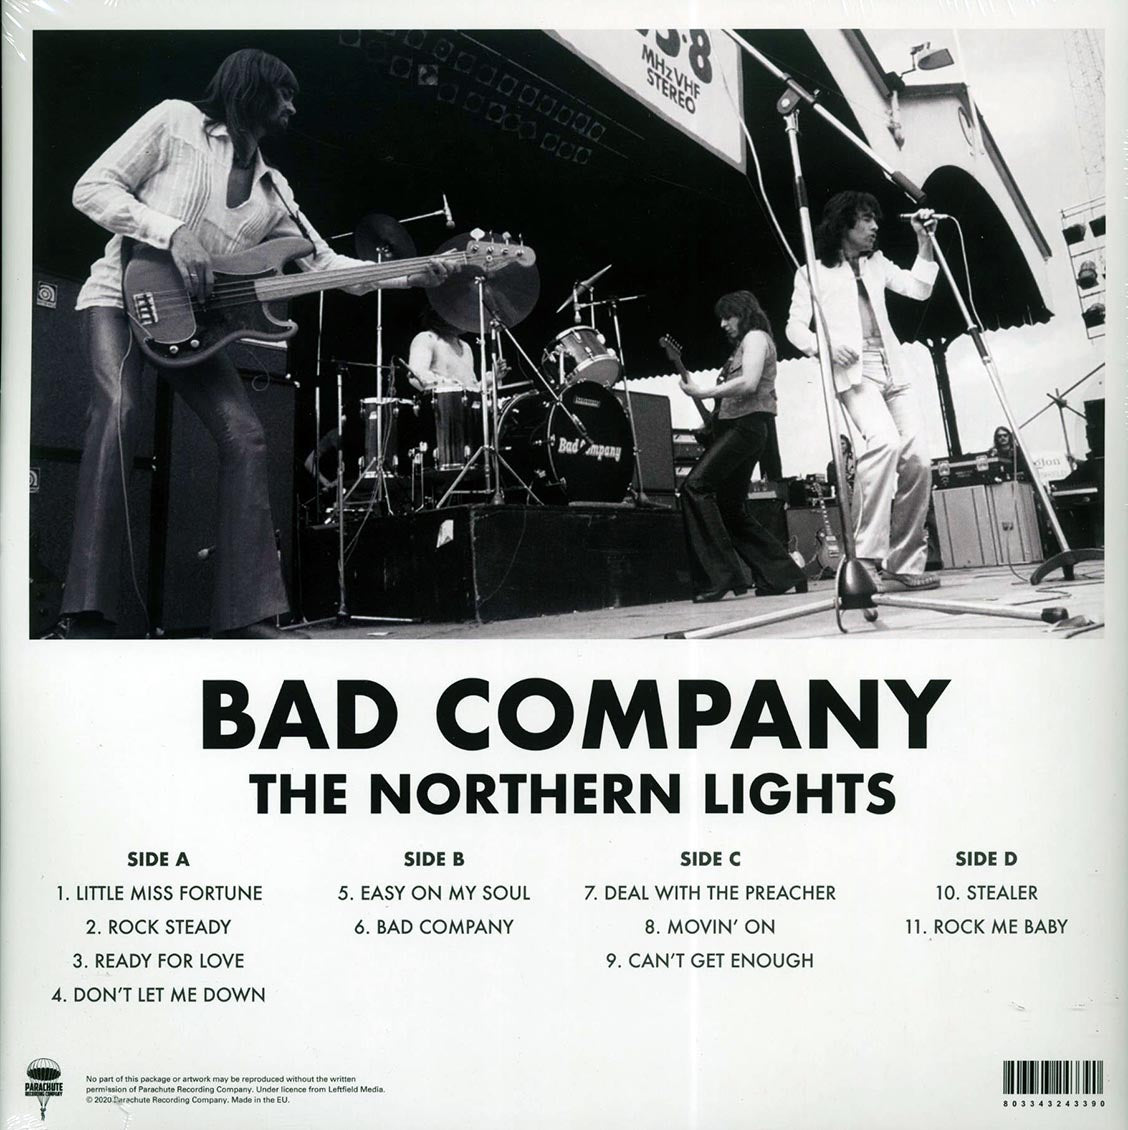 Bad Company - The Northern Lights: Newcastle City Hall Broadcast 1974 (ltd. ed.) (2xLP) - Vinyl LP, LP